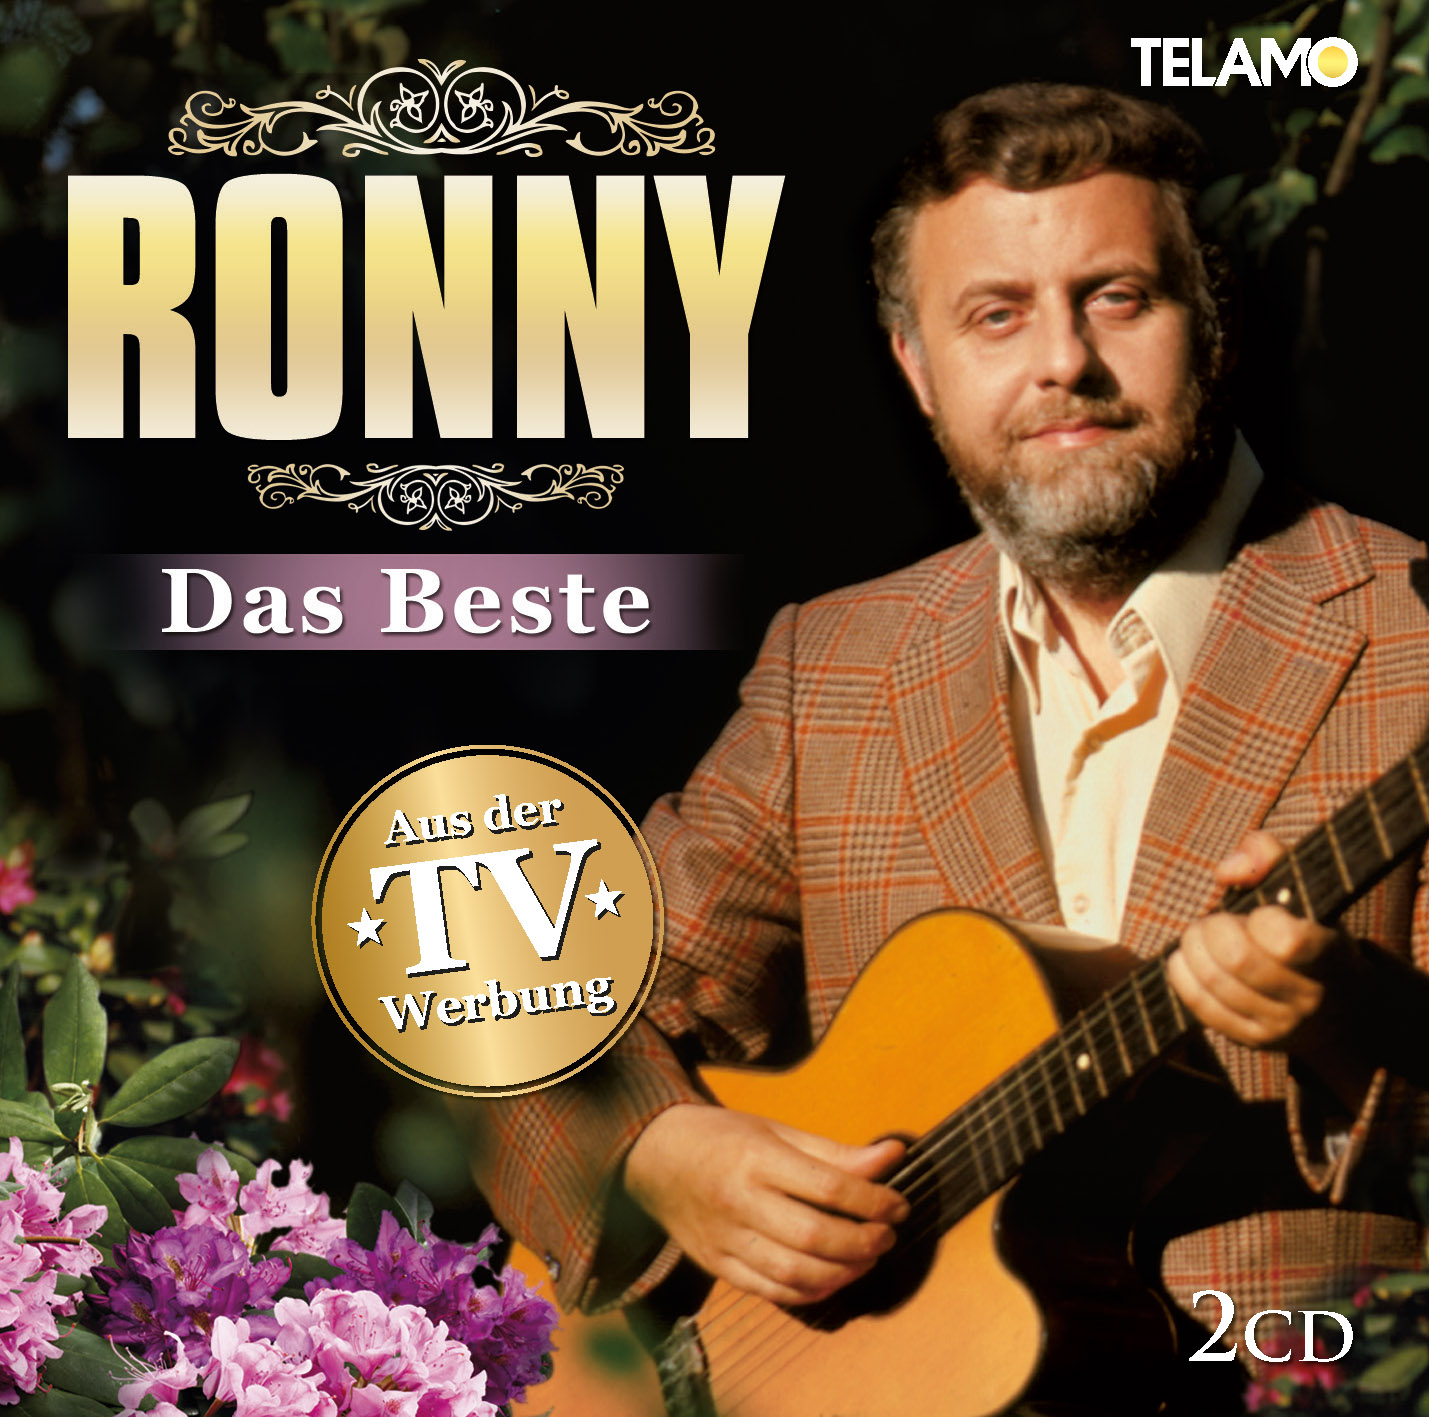 Ronny präsentiert „Das Beste“ – Telamo